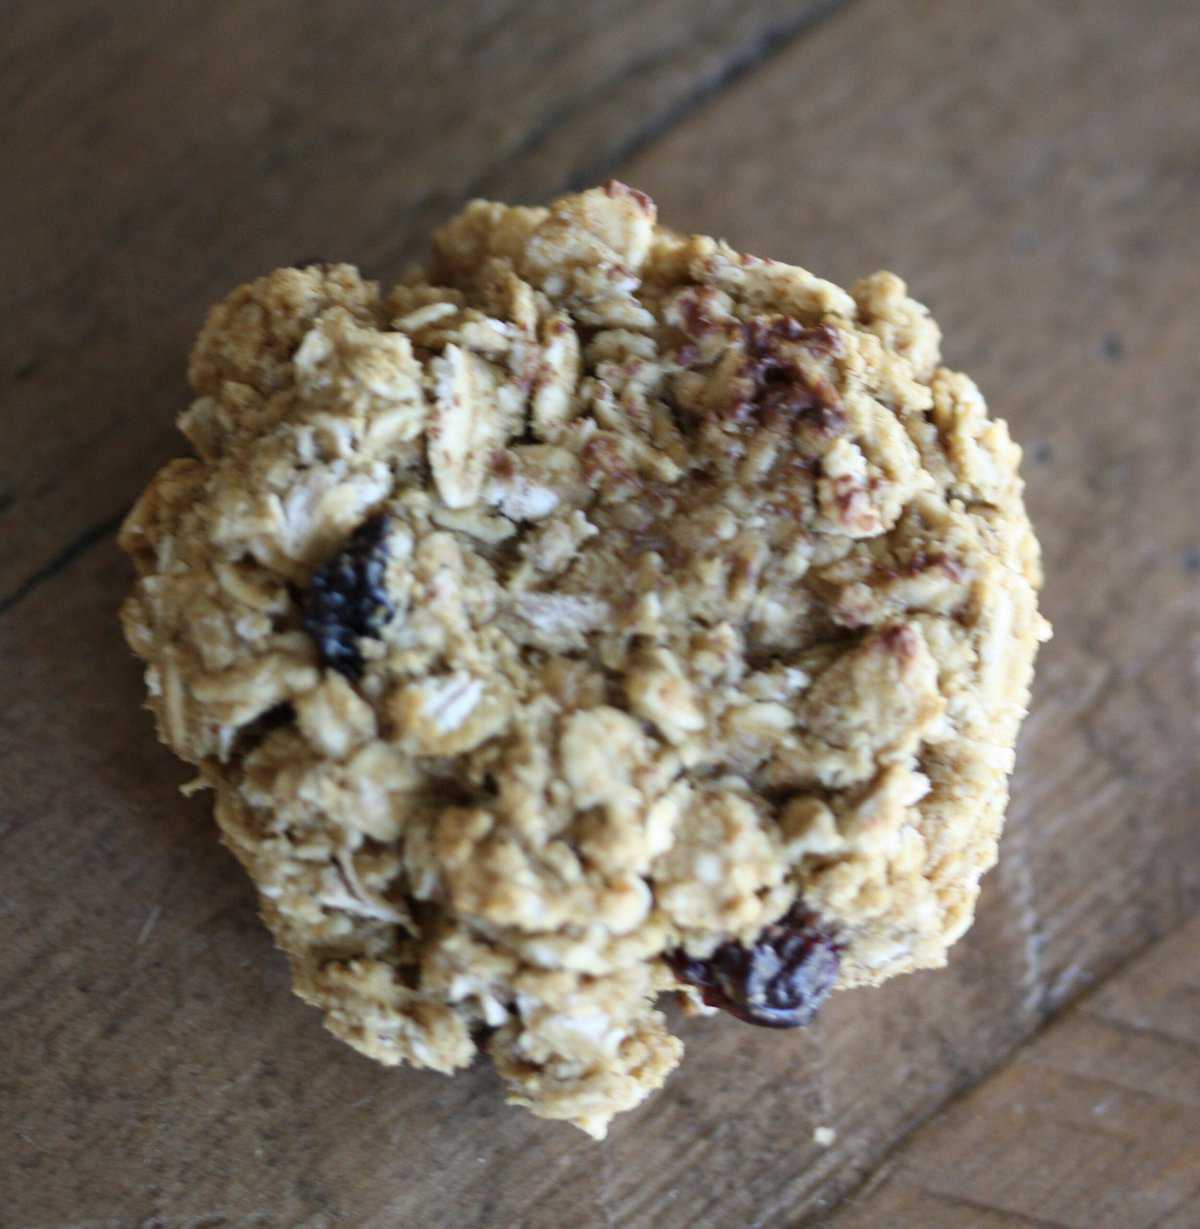 Gluten-free cherry oatmeal cookie.